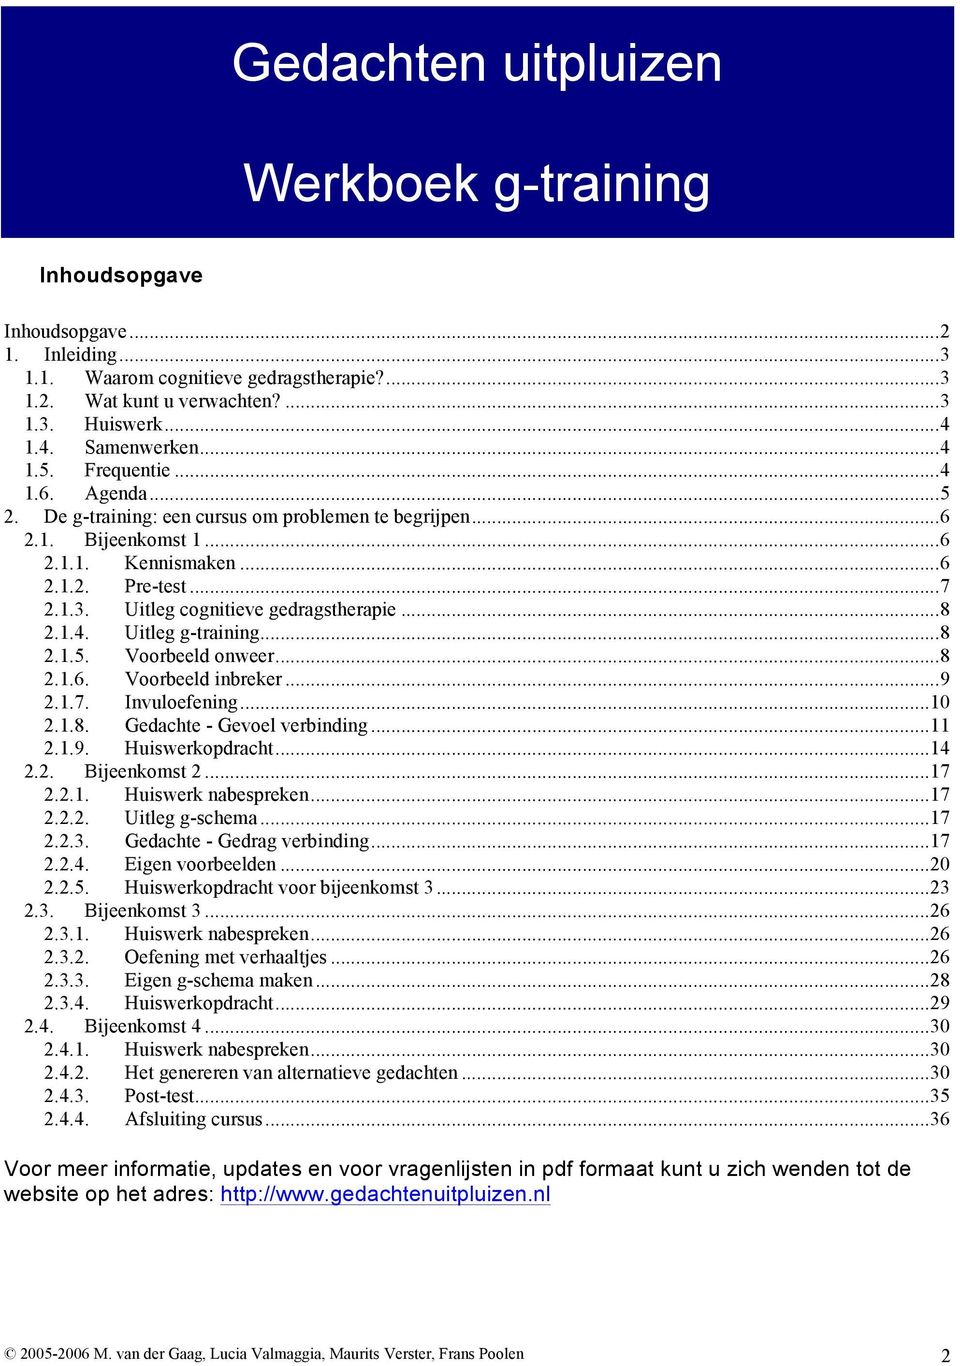 Super Gedachten uitpluizen. Werkboek g-training - PDF Free Download AA-93